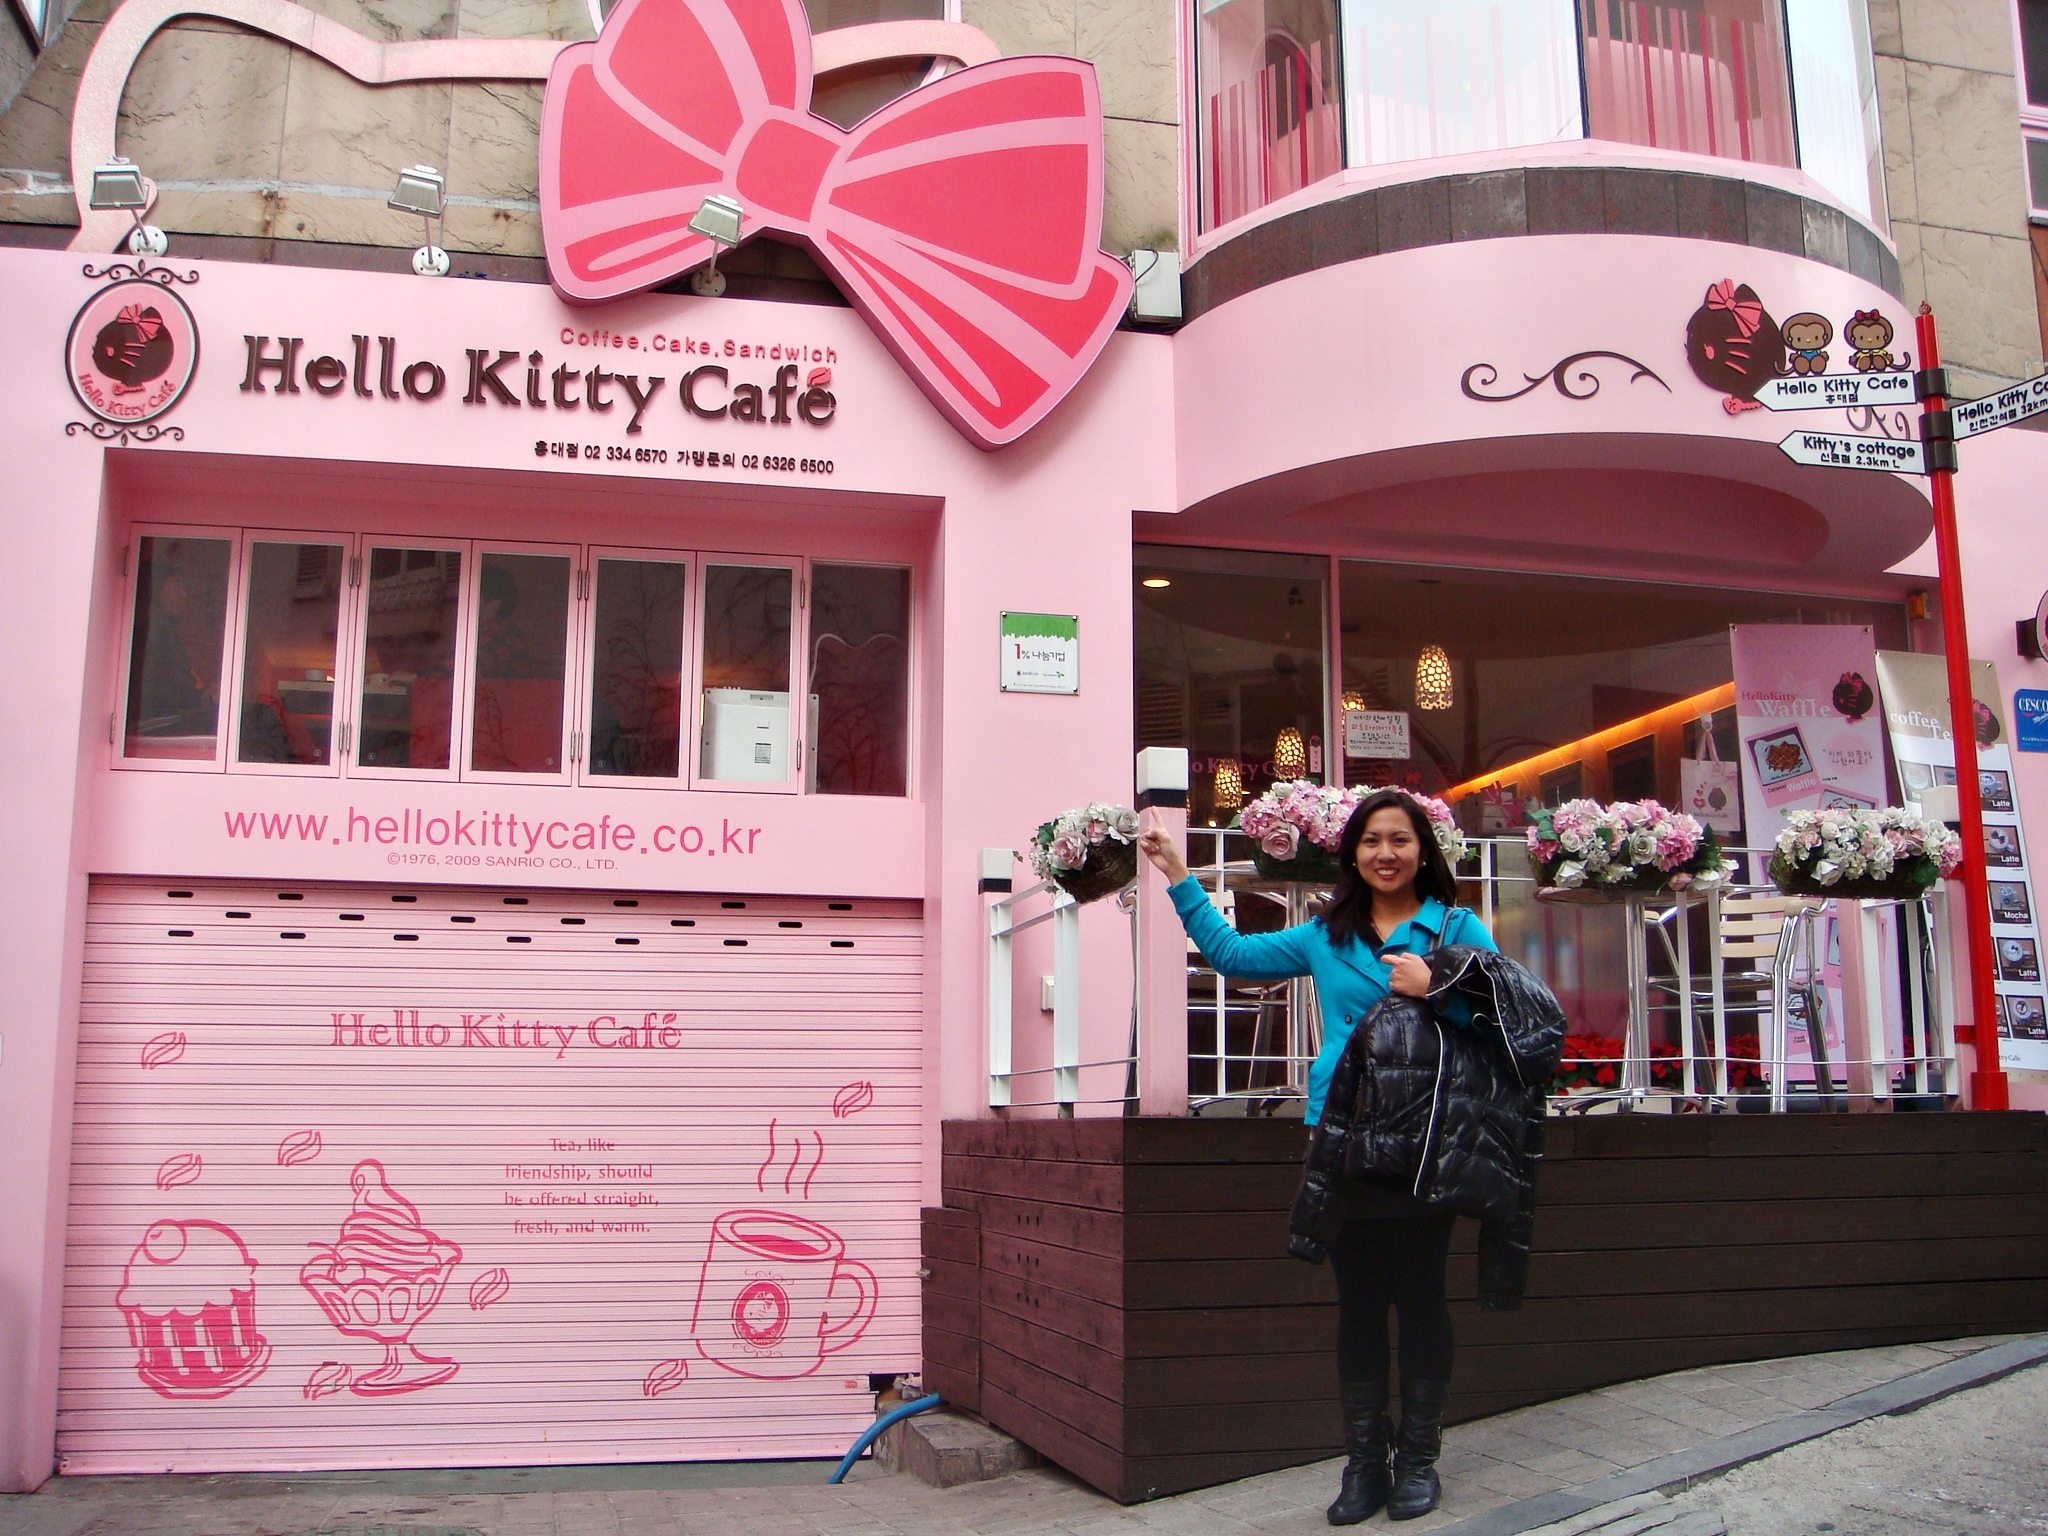  Hello Kitty Cafe  clar s misadventures